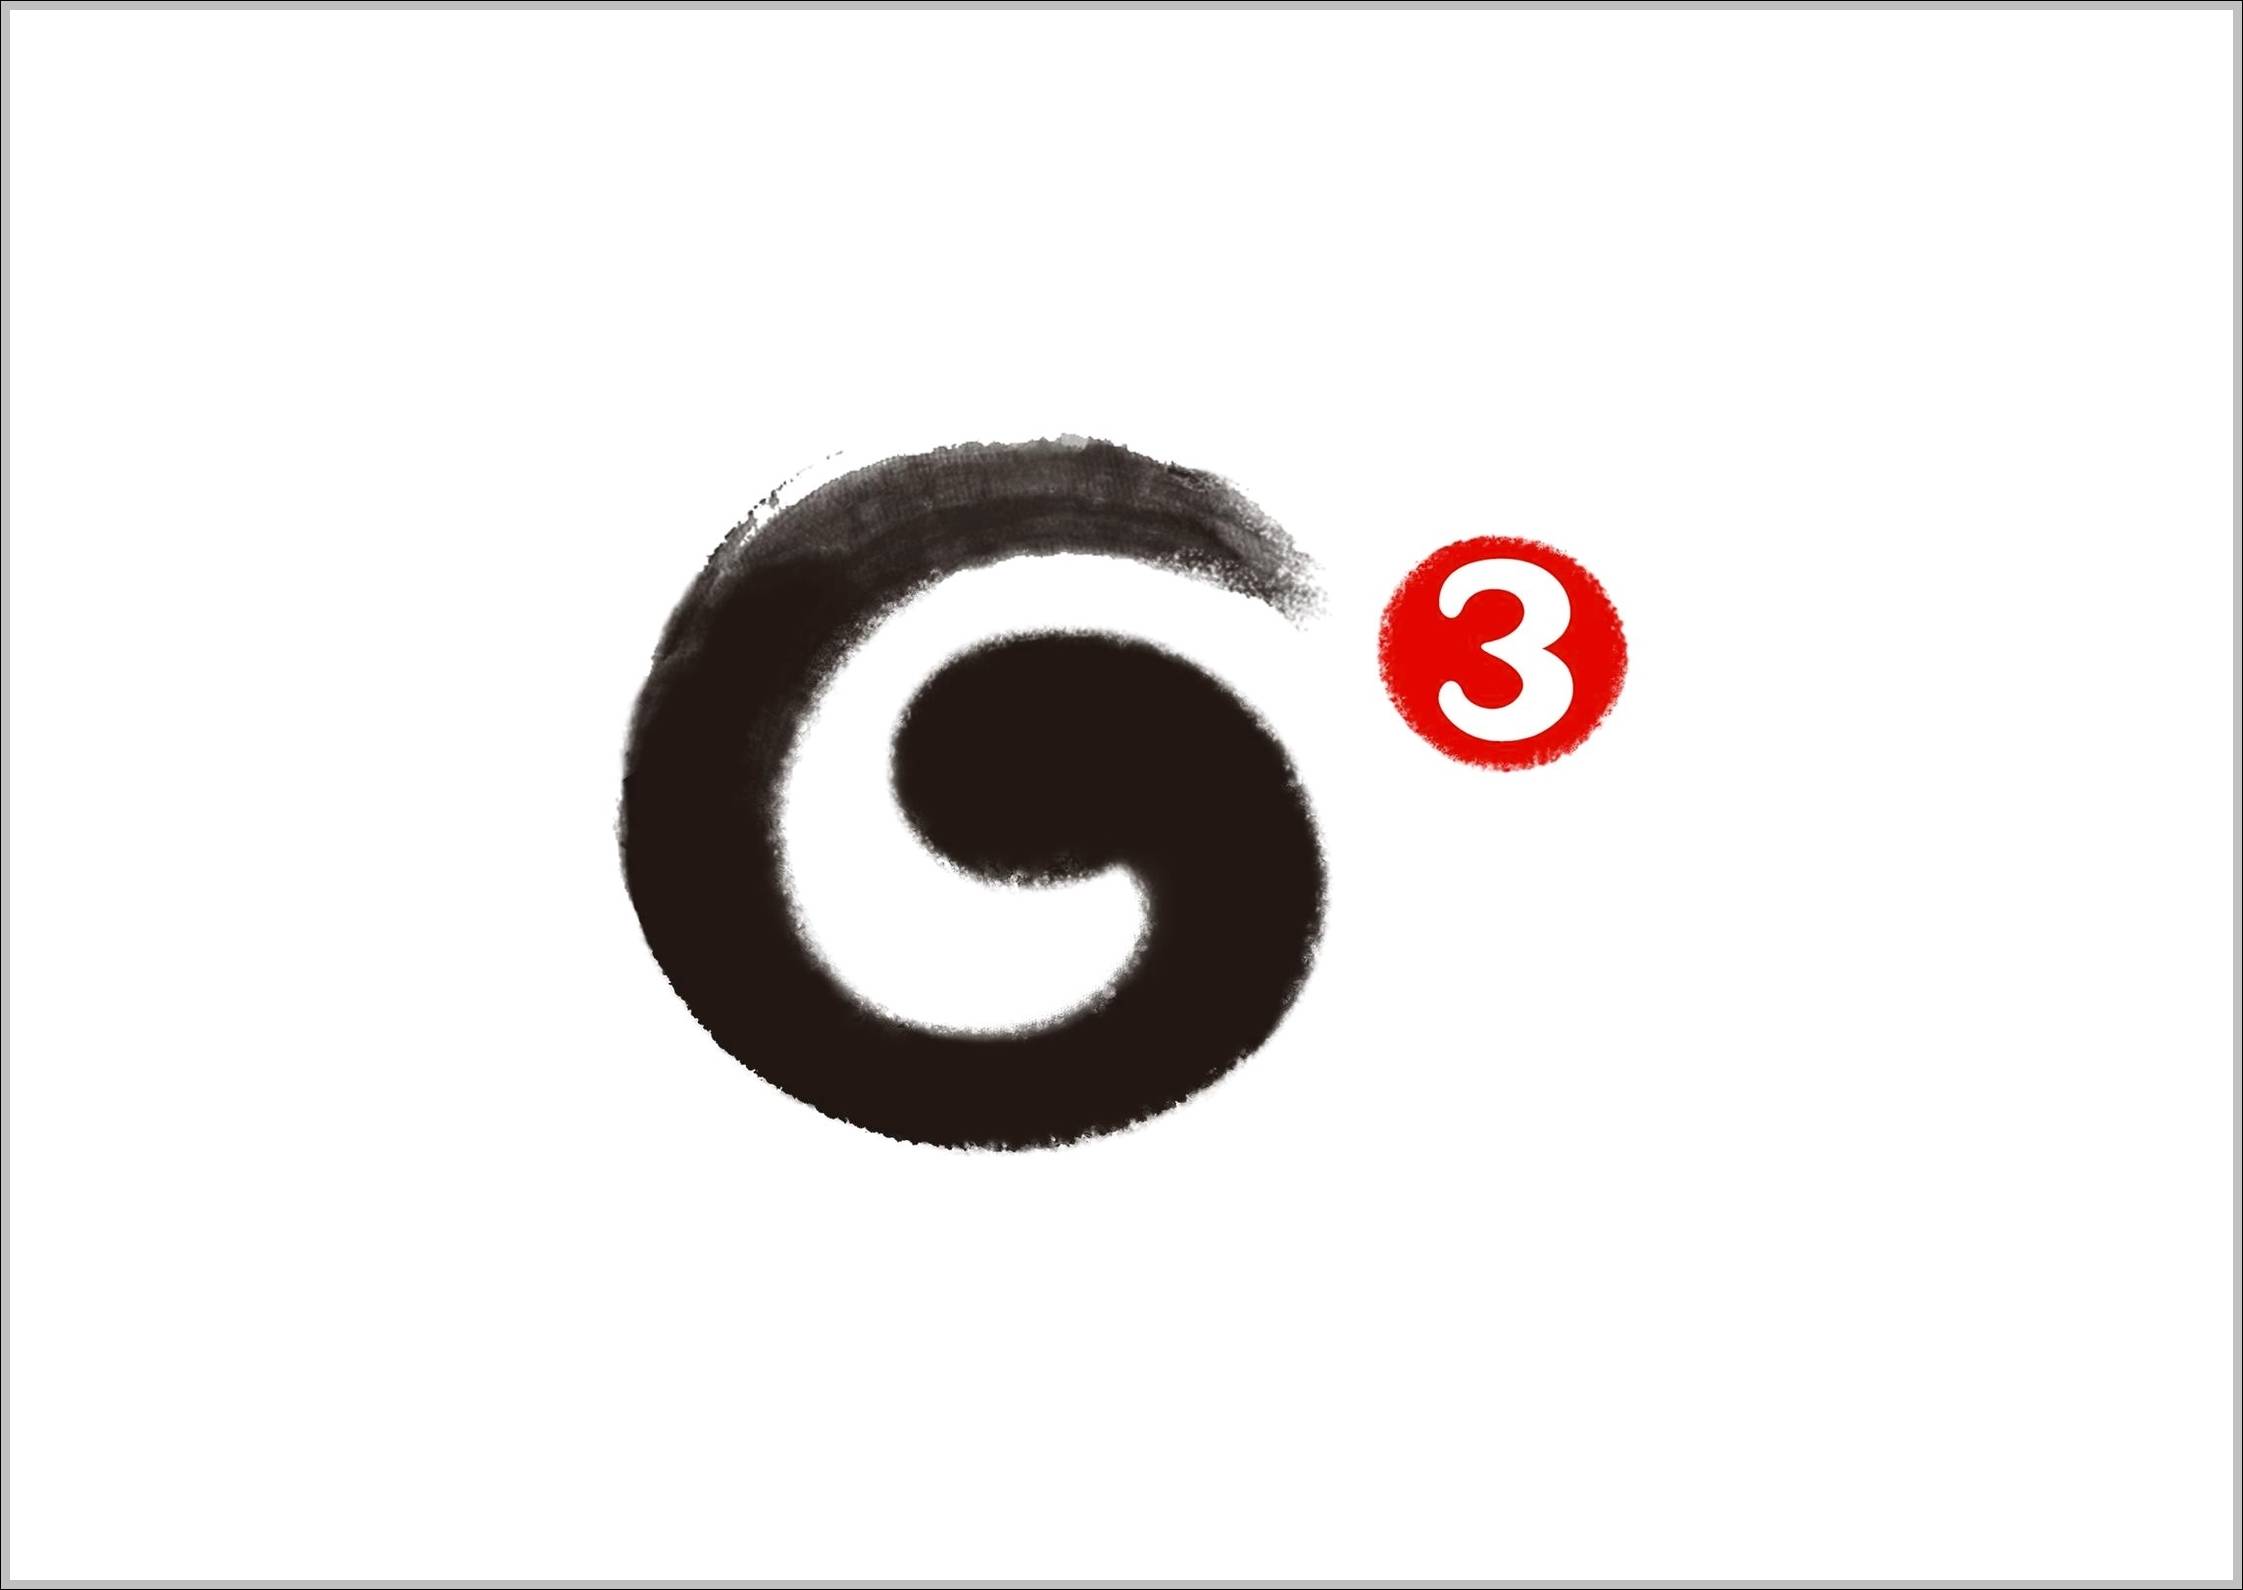 G3 logo of China Mobile